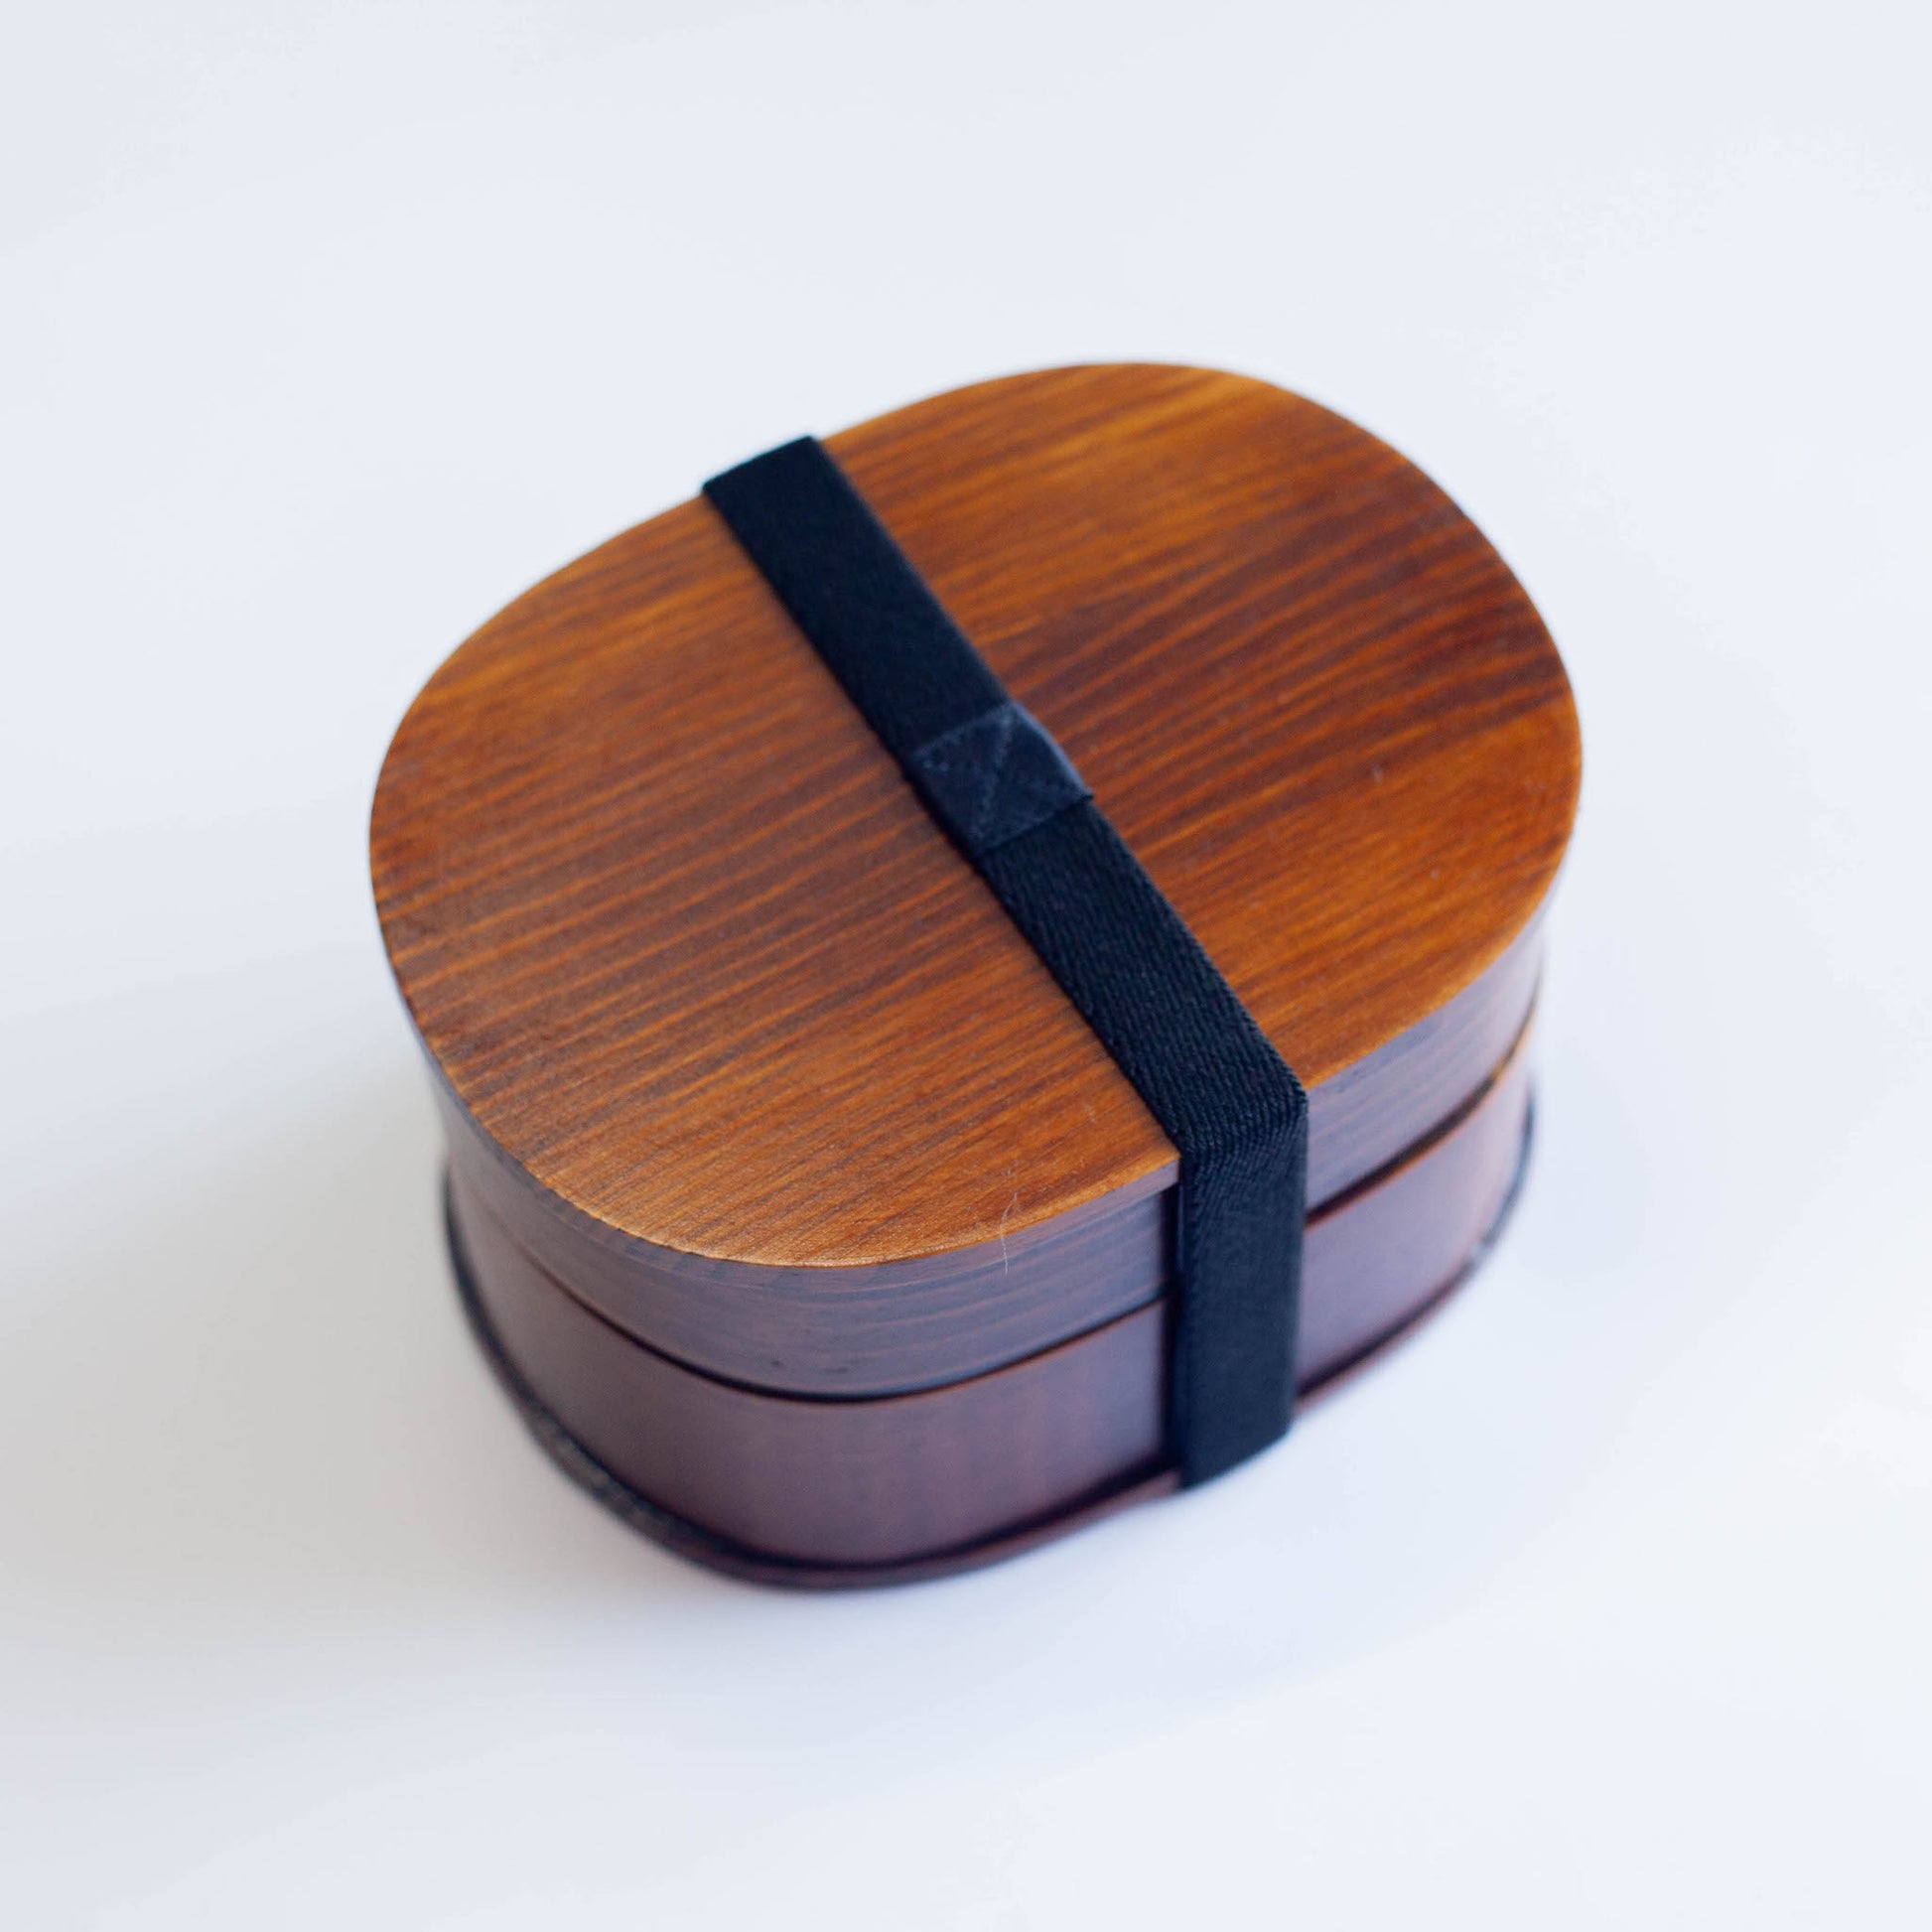 Handmade Japanese Double Layer Bento Box Set, Wooden Bento Box